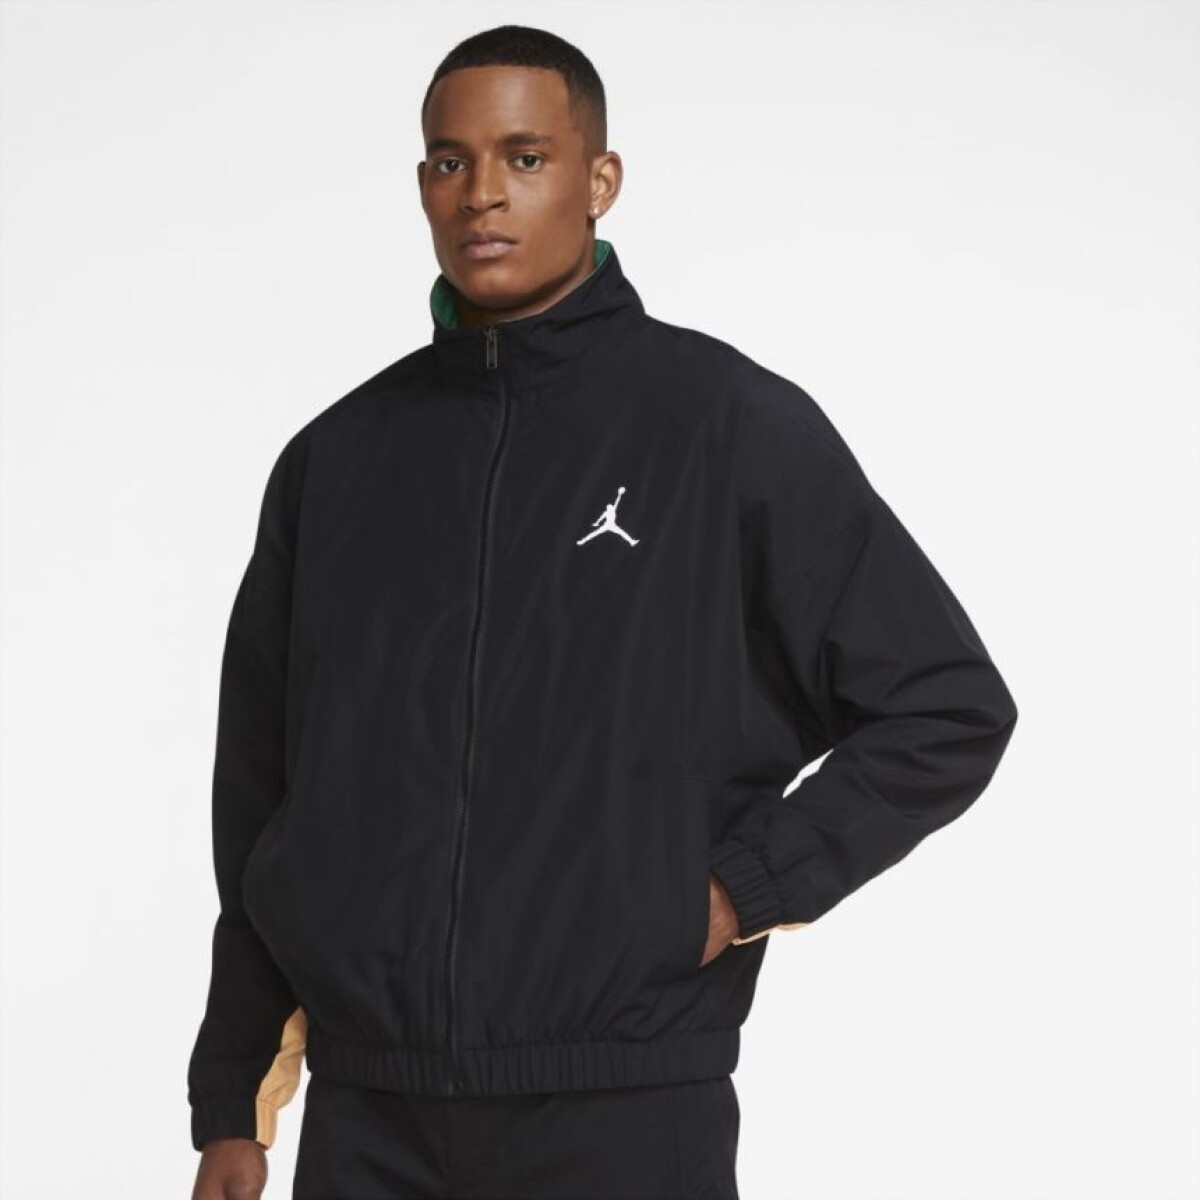 Campera Nike Moda Hombre Jordan Black - S/C 